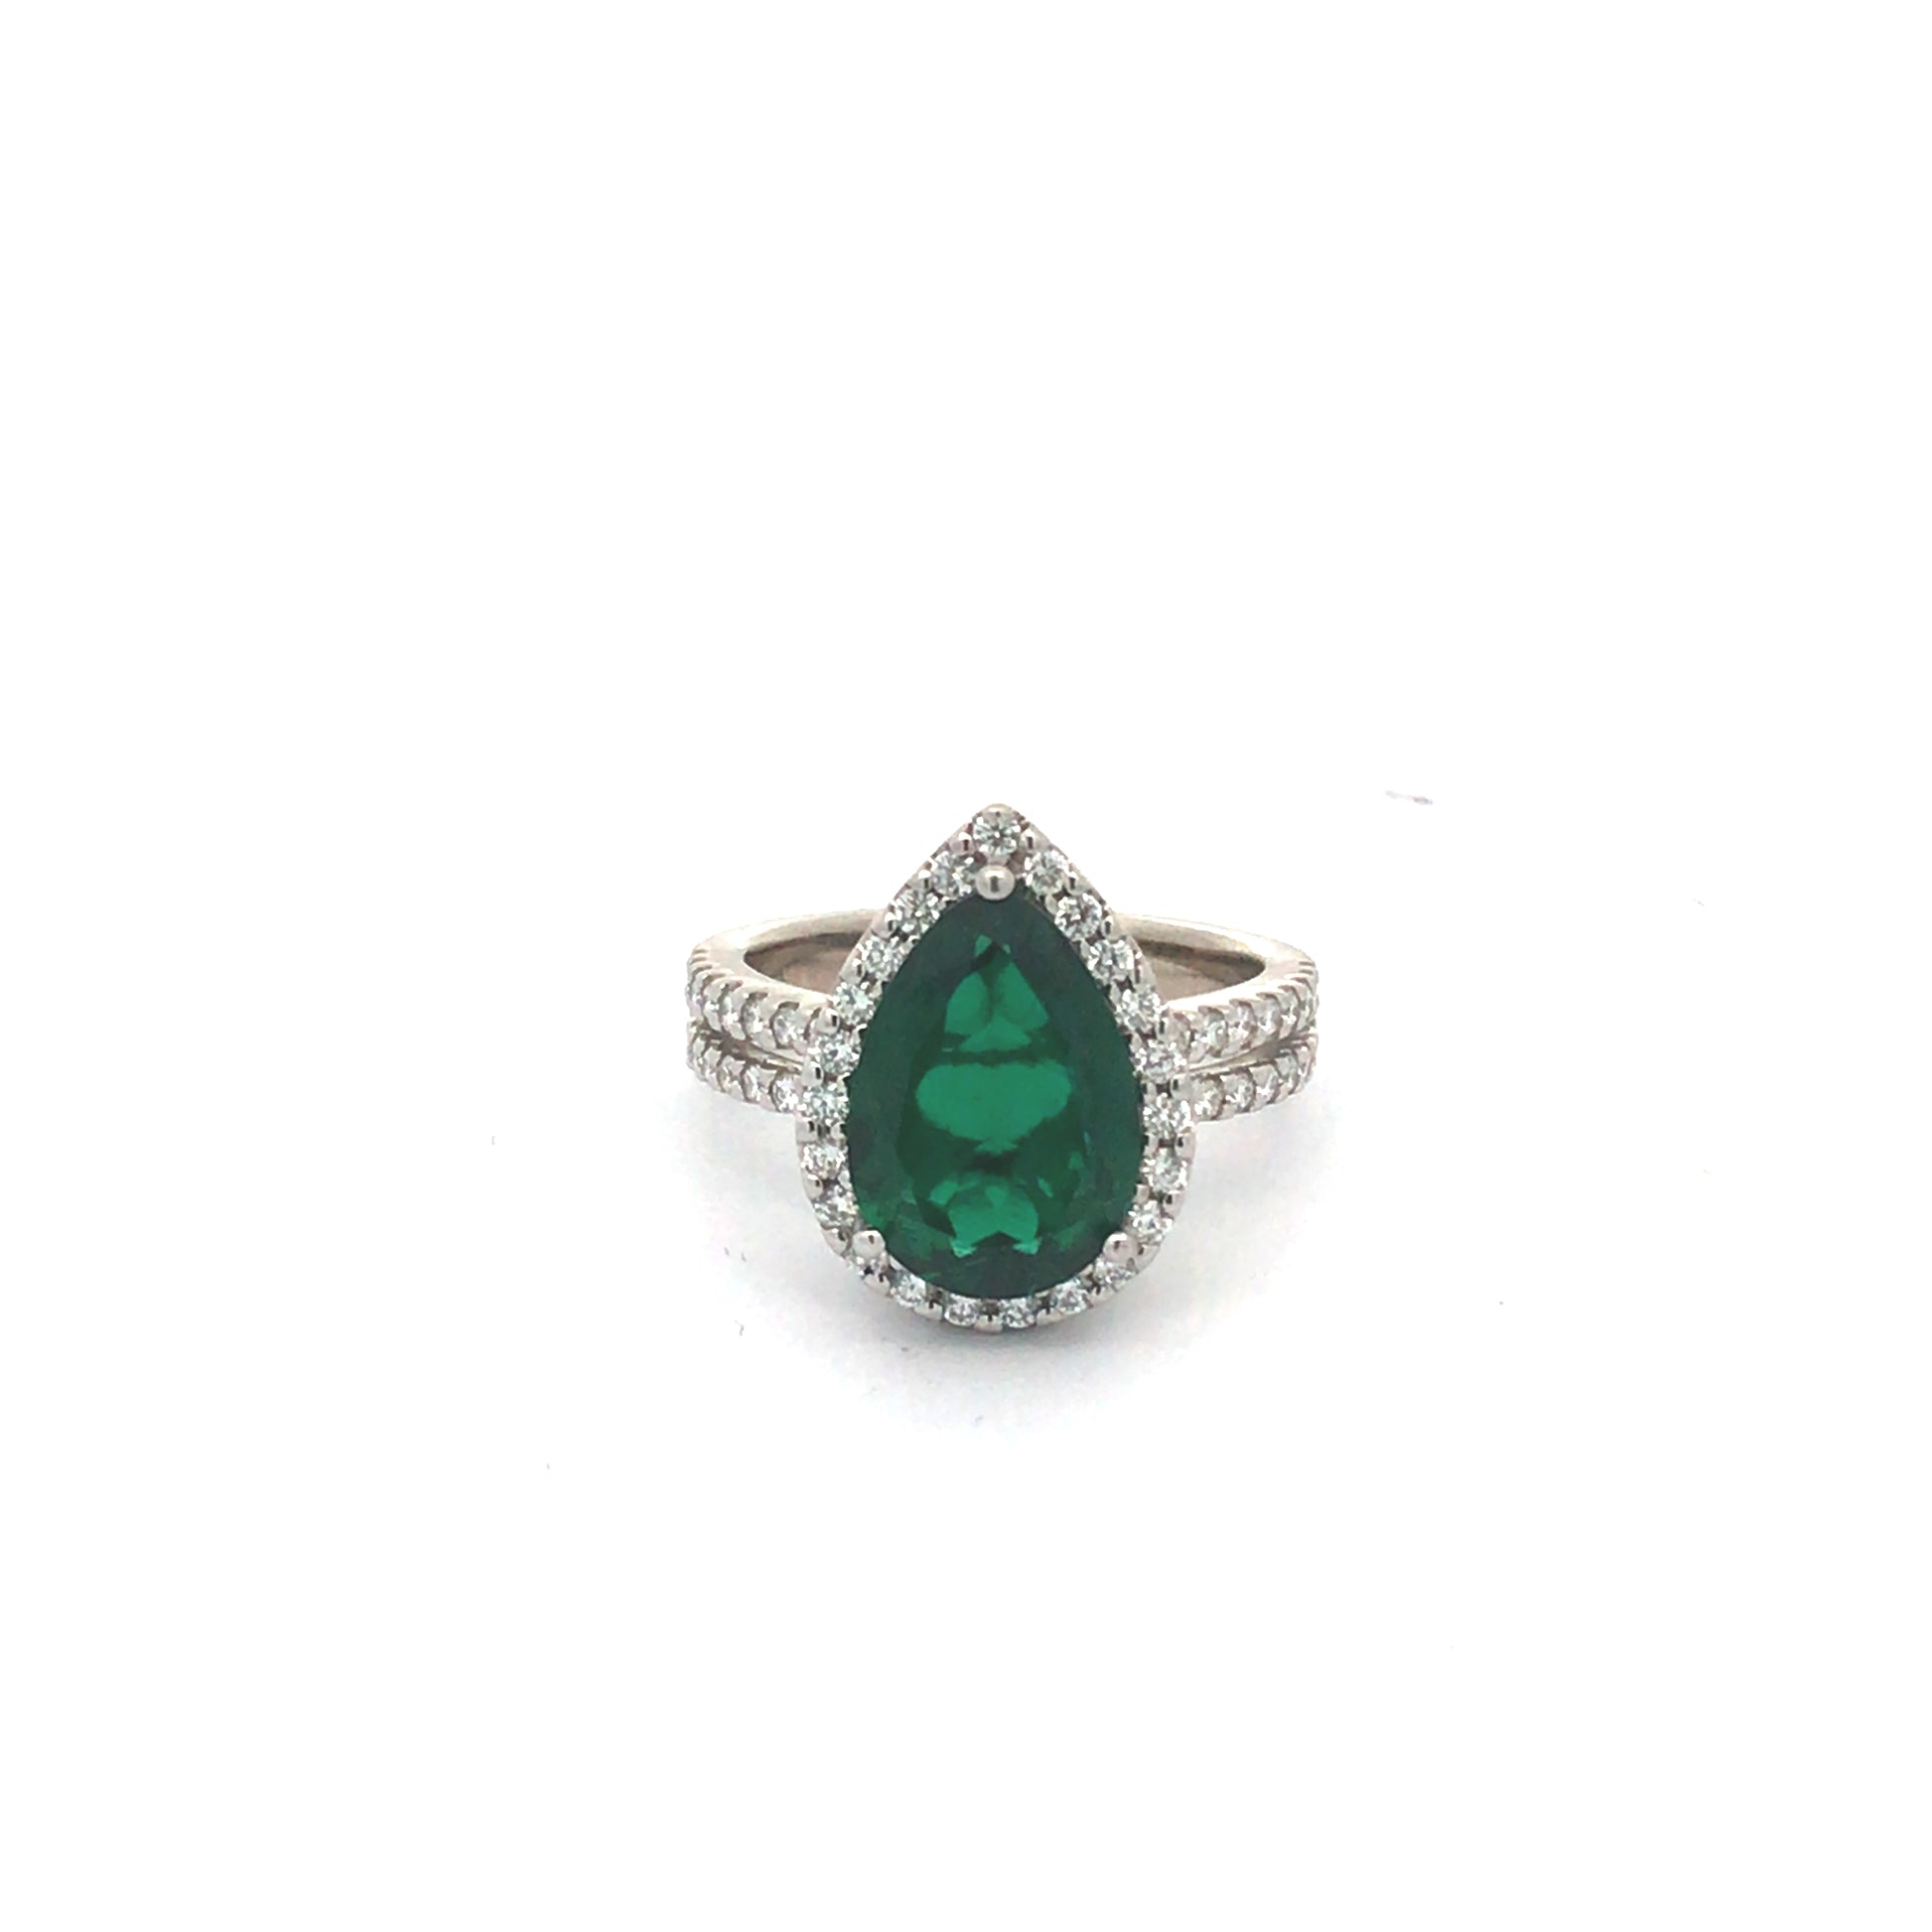 14K White Gold Lab Created Emerald & Diamond Ring Size 7 Dwt 4.3Dwt